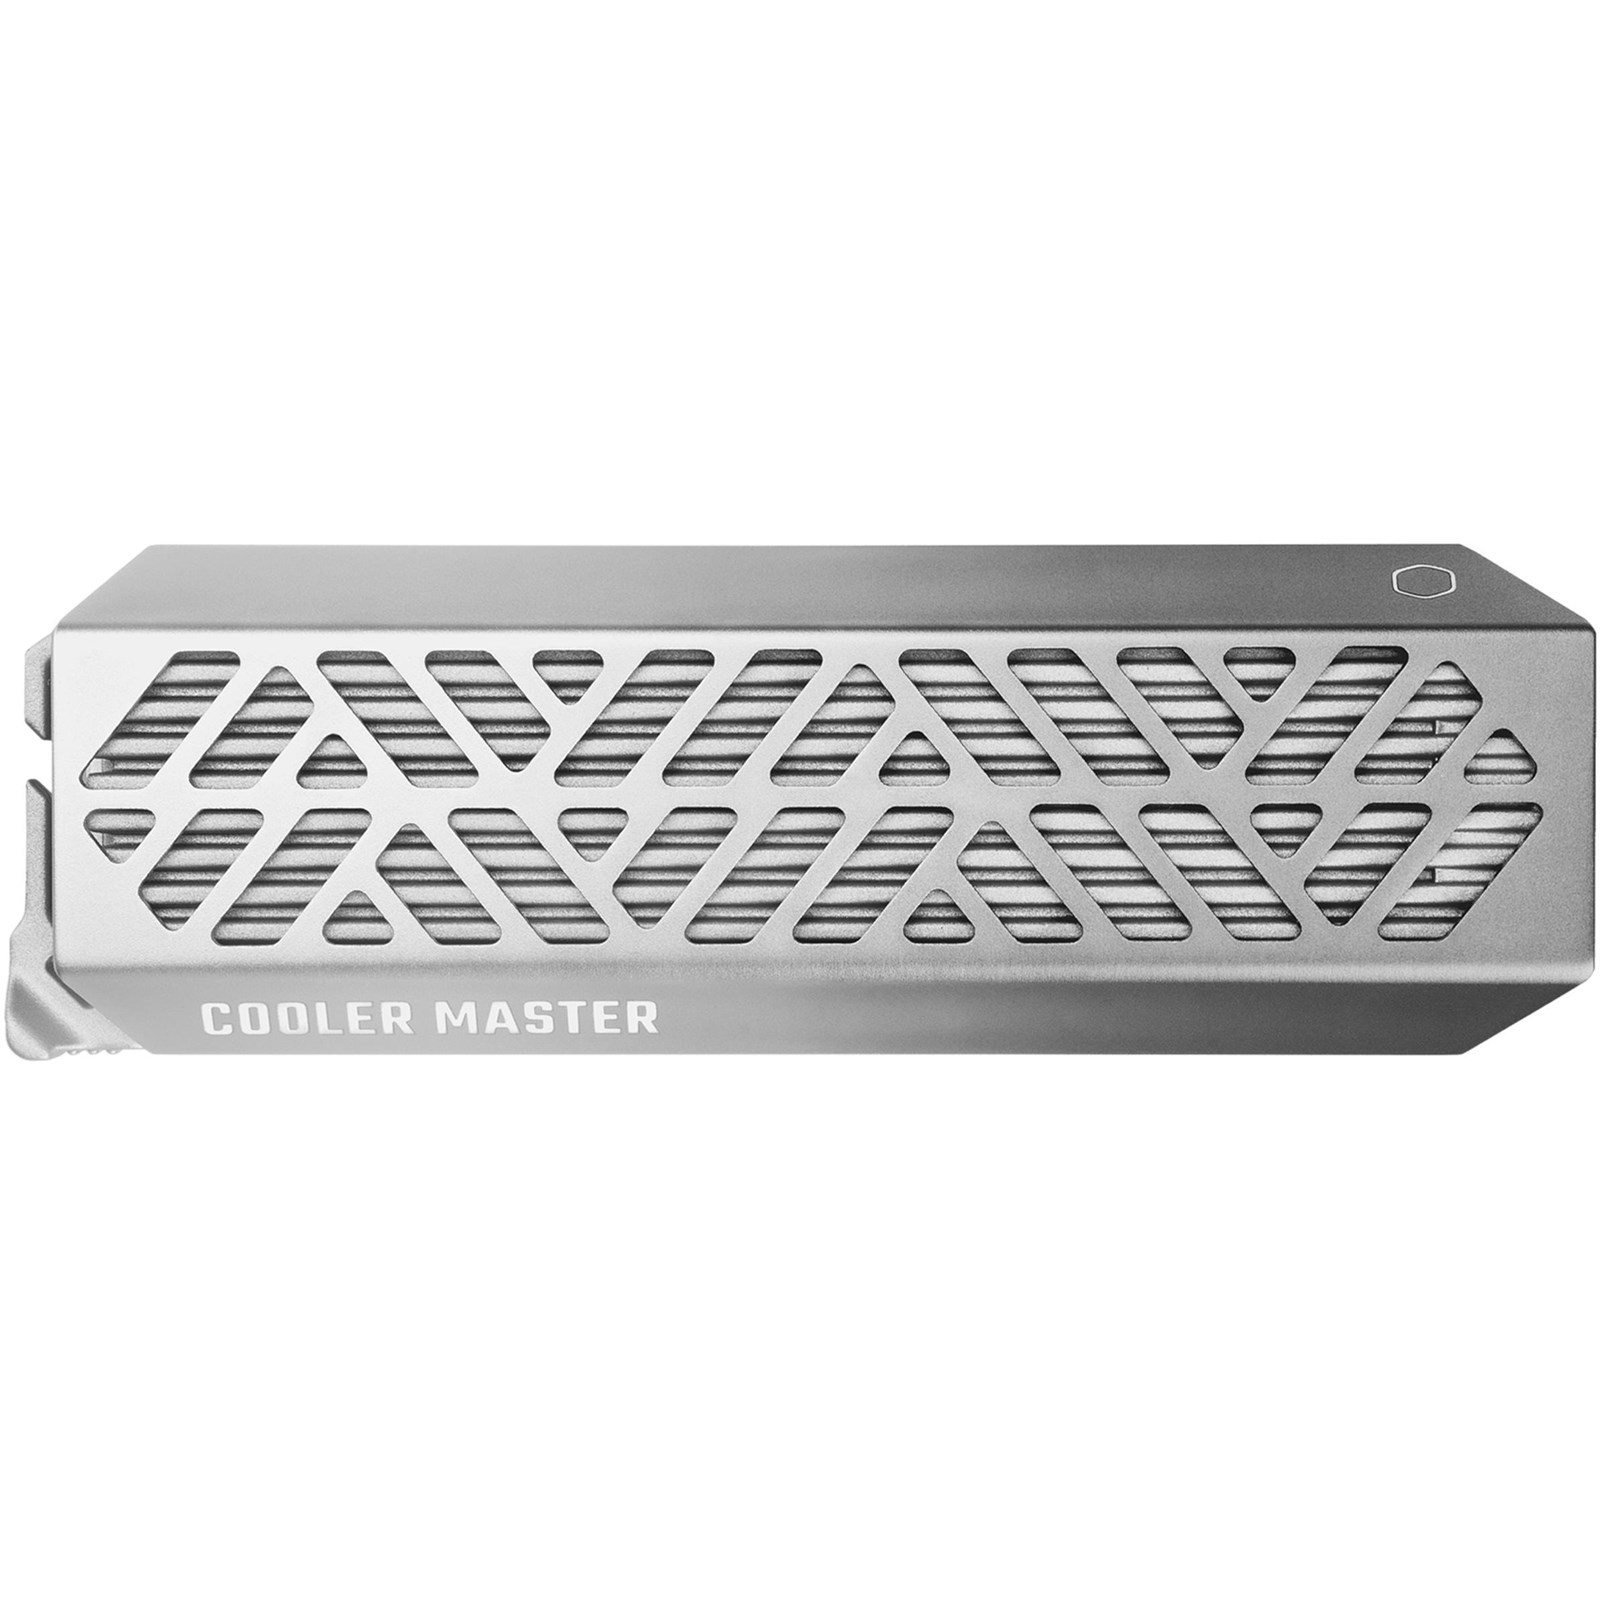 Cooler Master Oracle Air USB-C M.2 SSD Enclosure